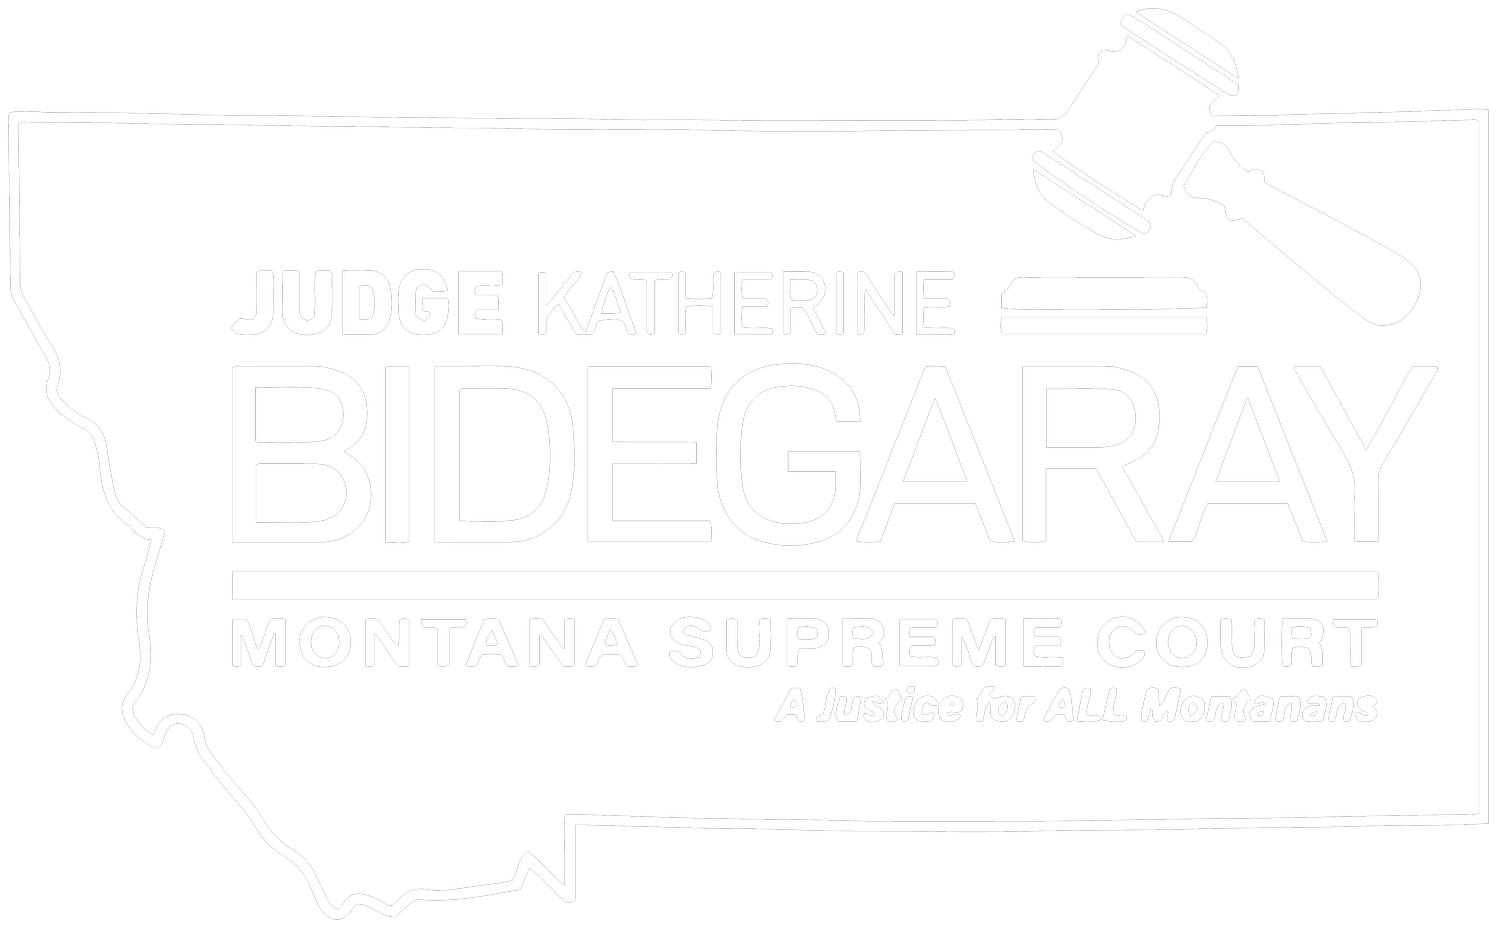 Judge Katherine Bidegaray for Montana Supreme Court 